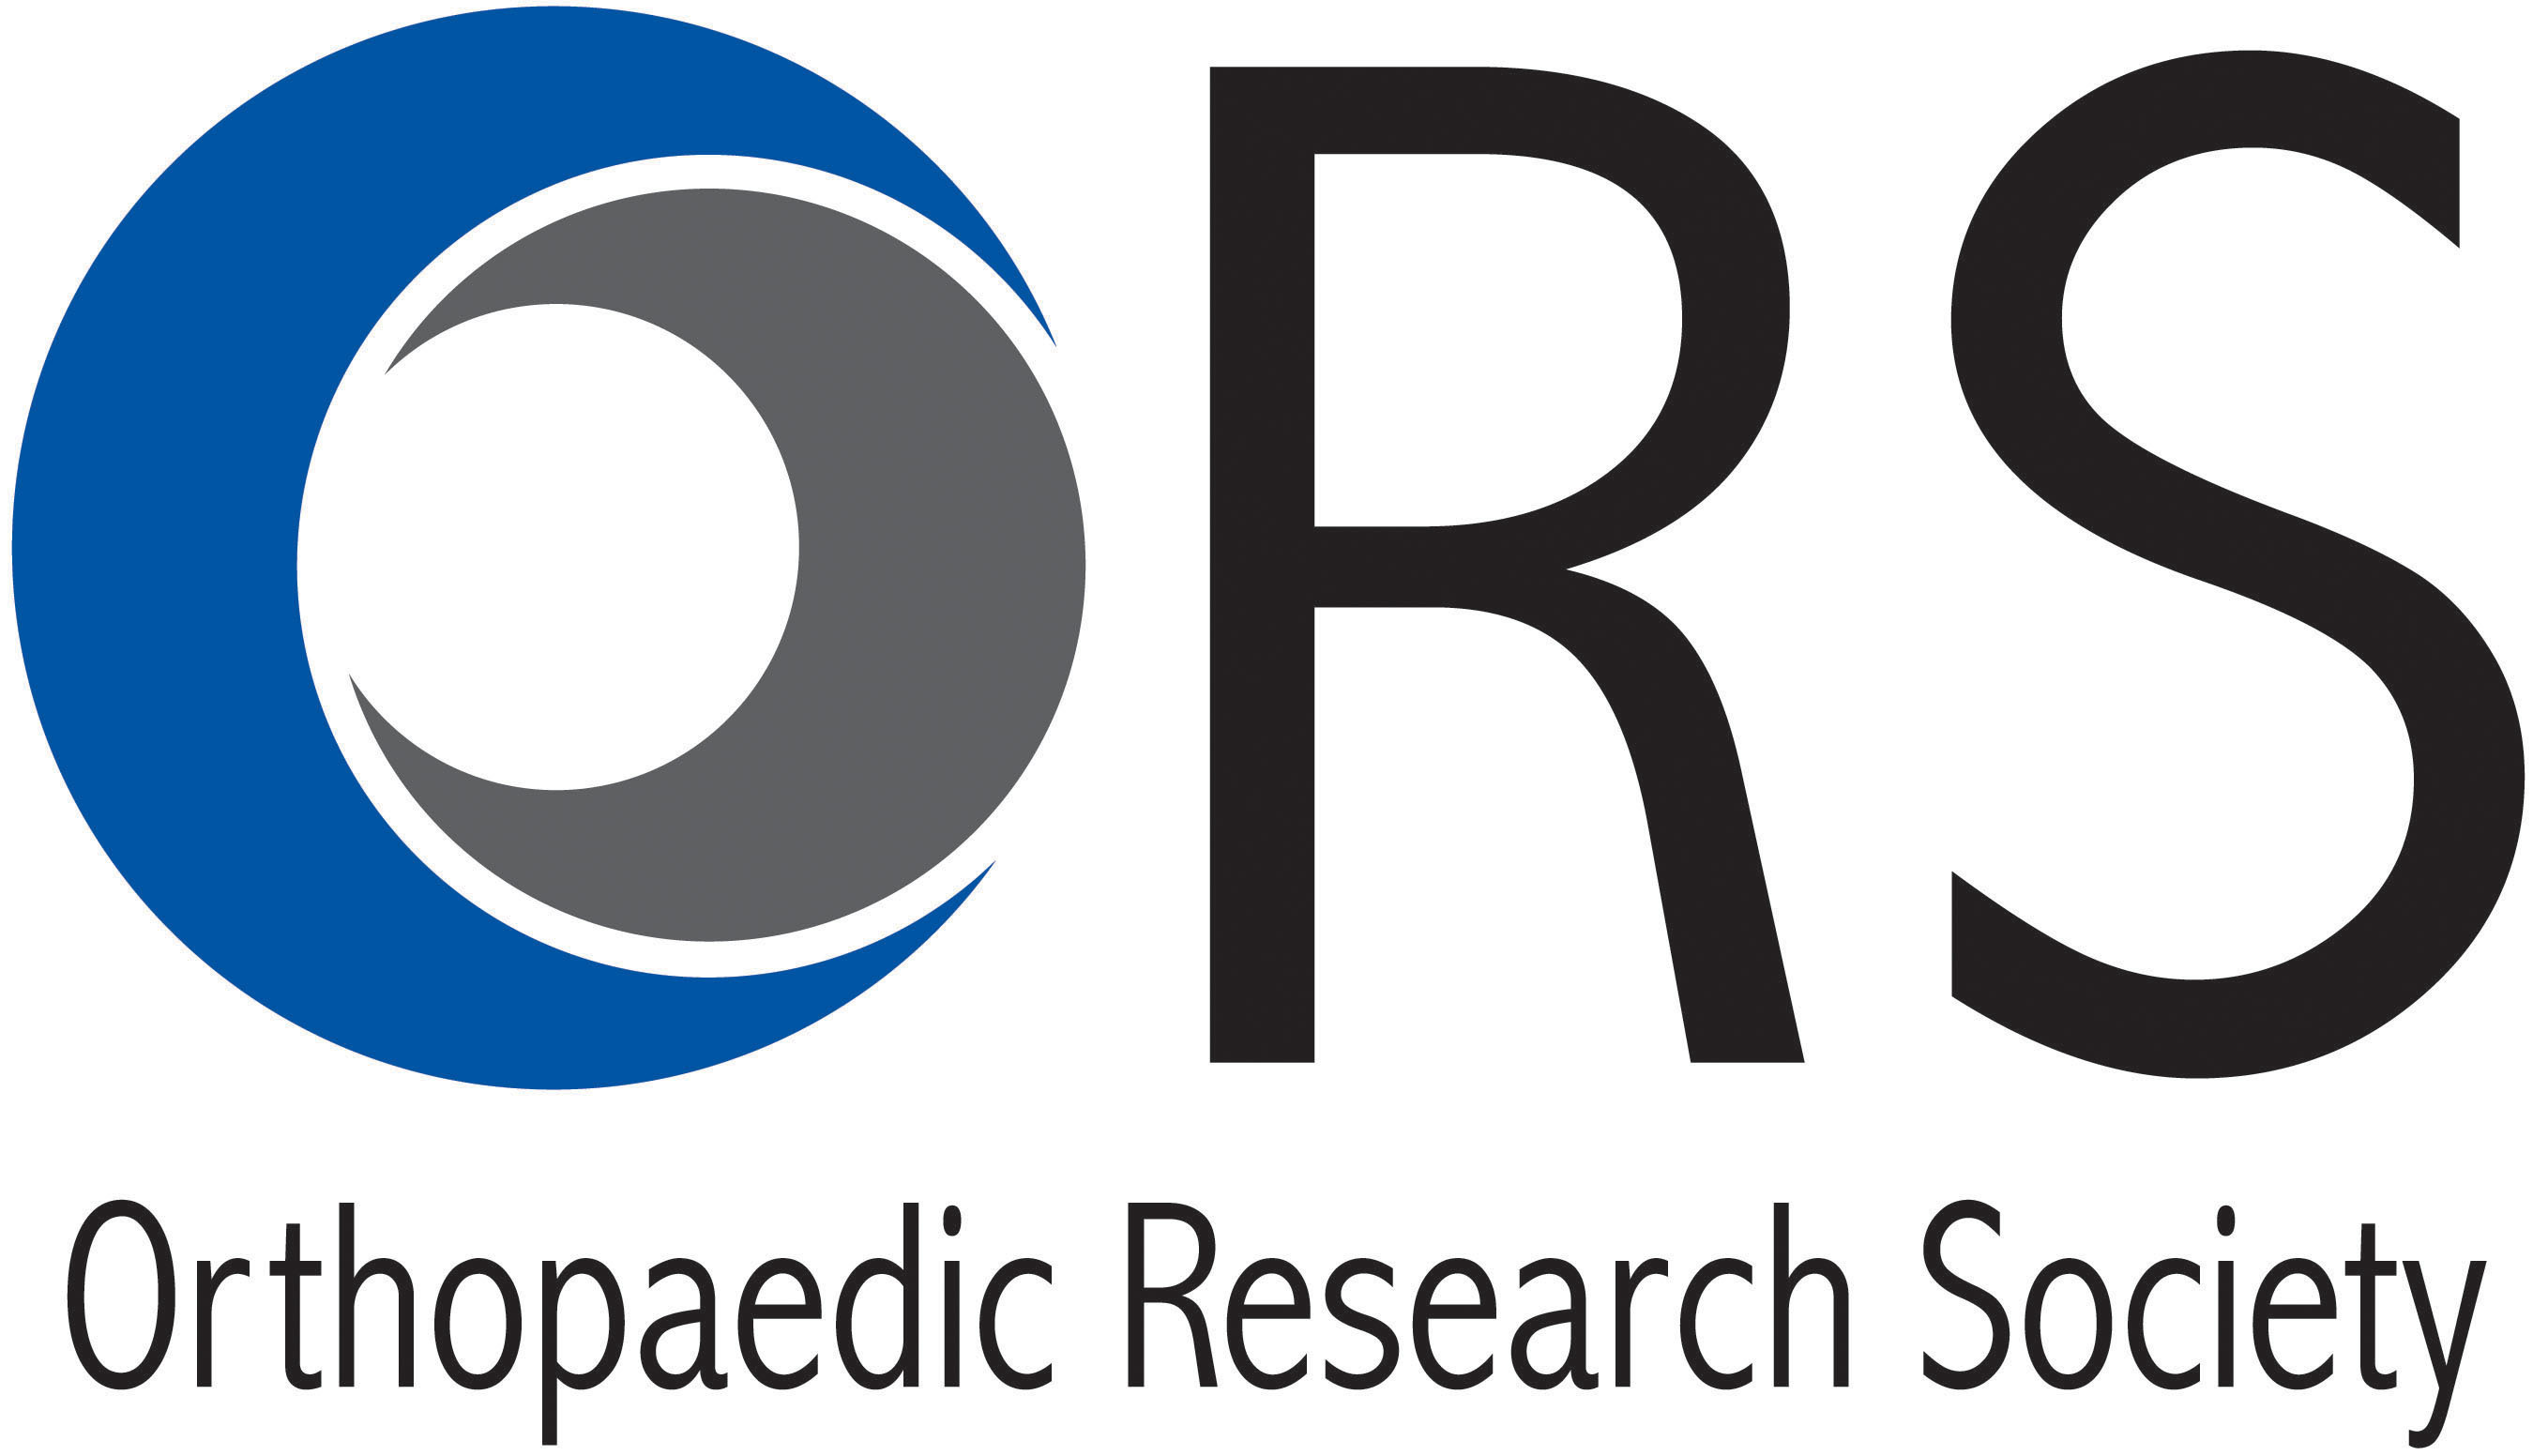 Orthopaedic Research Society logo. (PRNewsFoto/Orthopaedic Research Society) (PRNewsFoto/Orthopaedic Research Society)